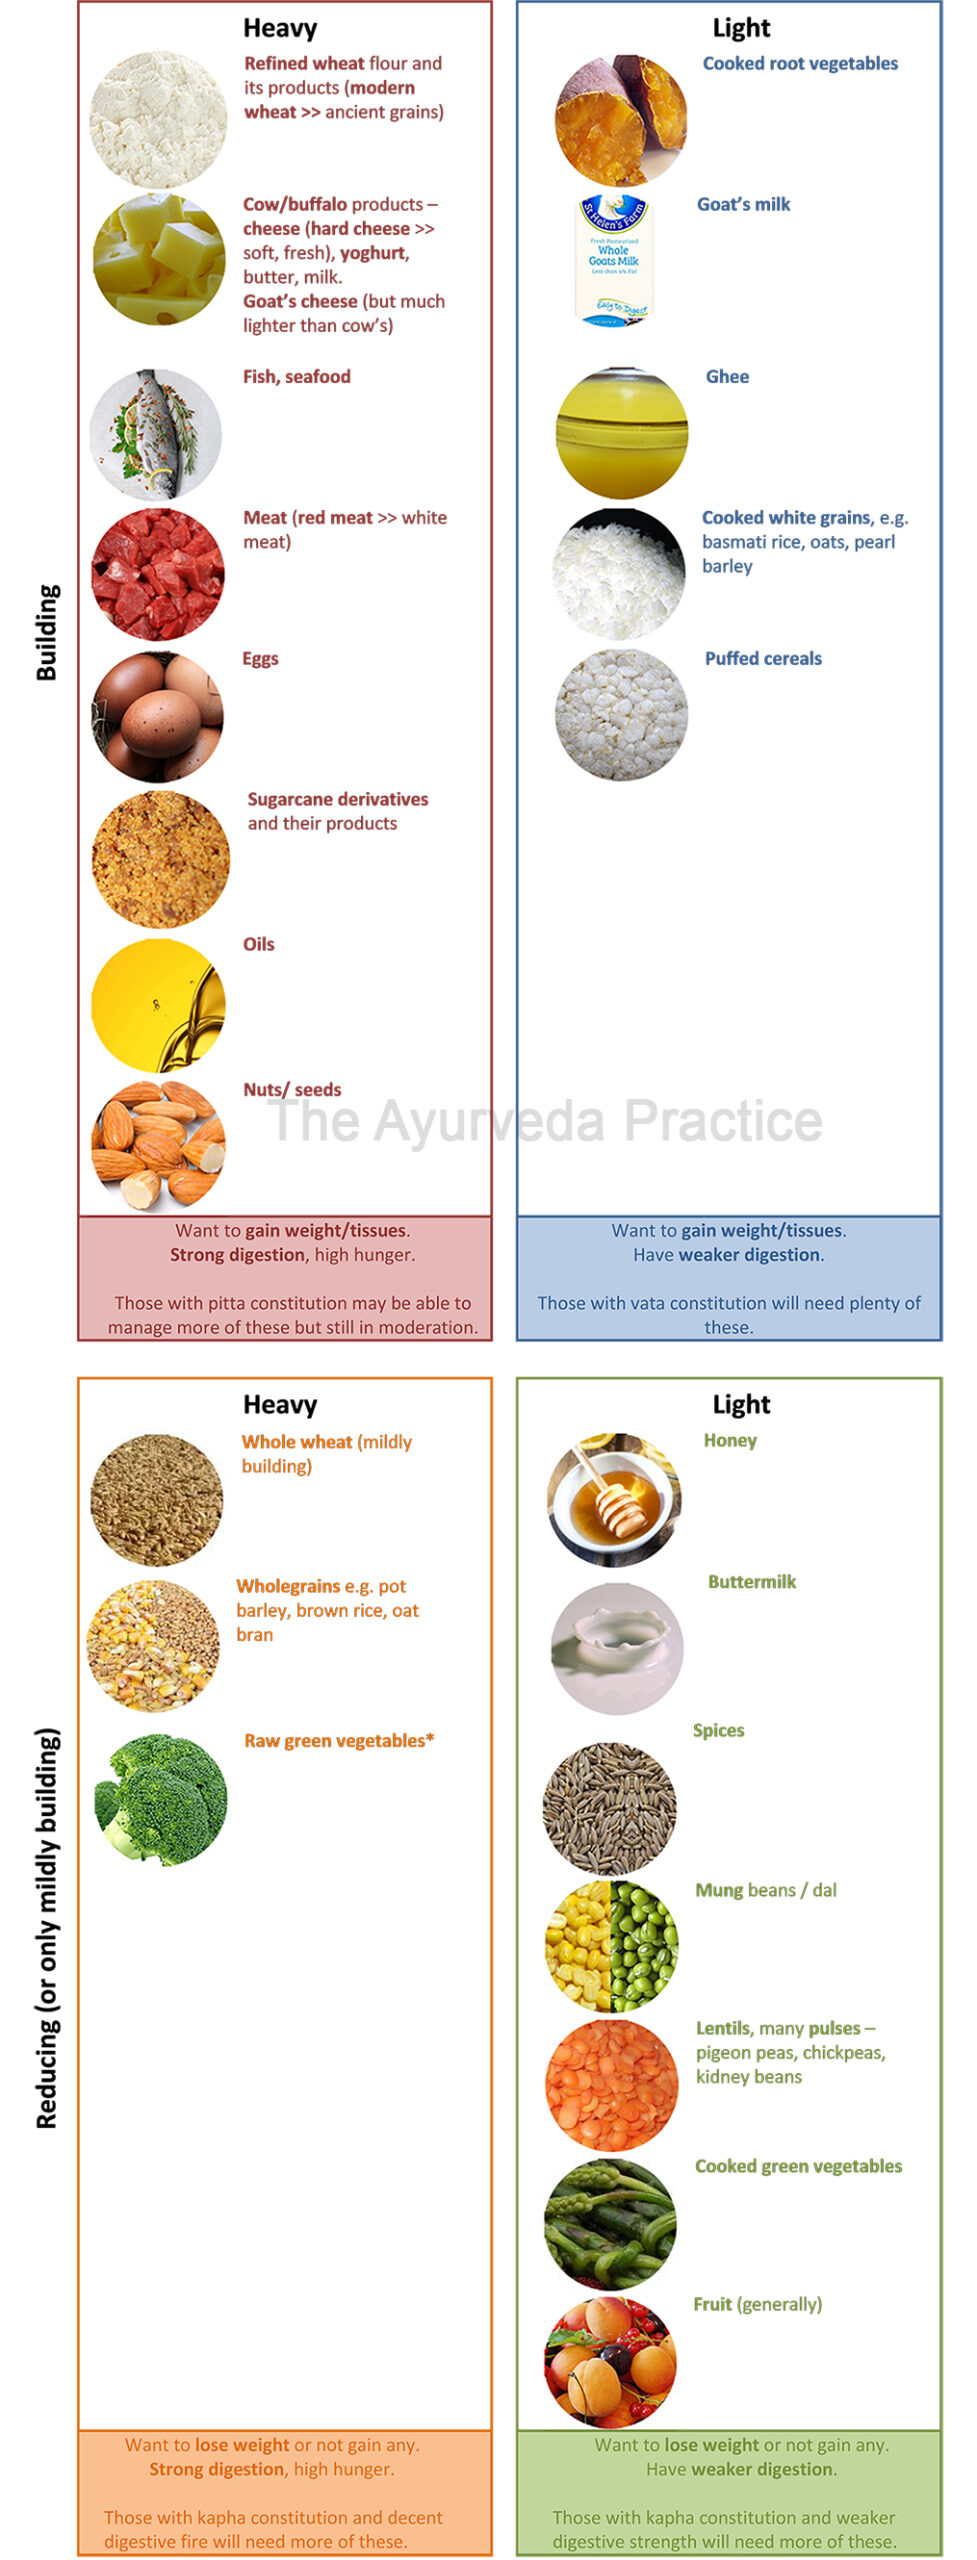 The Ayurveda Practice